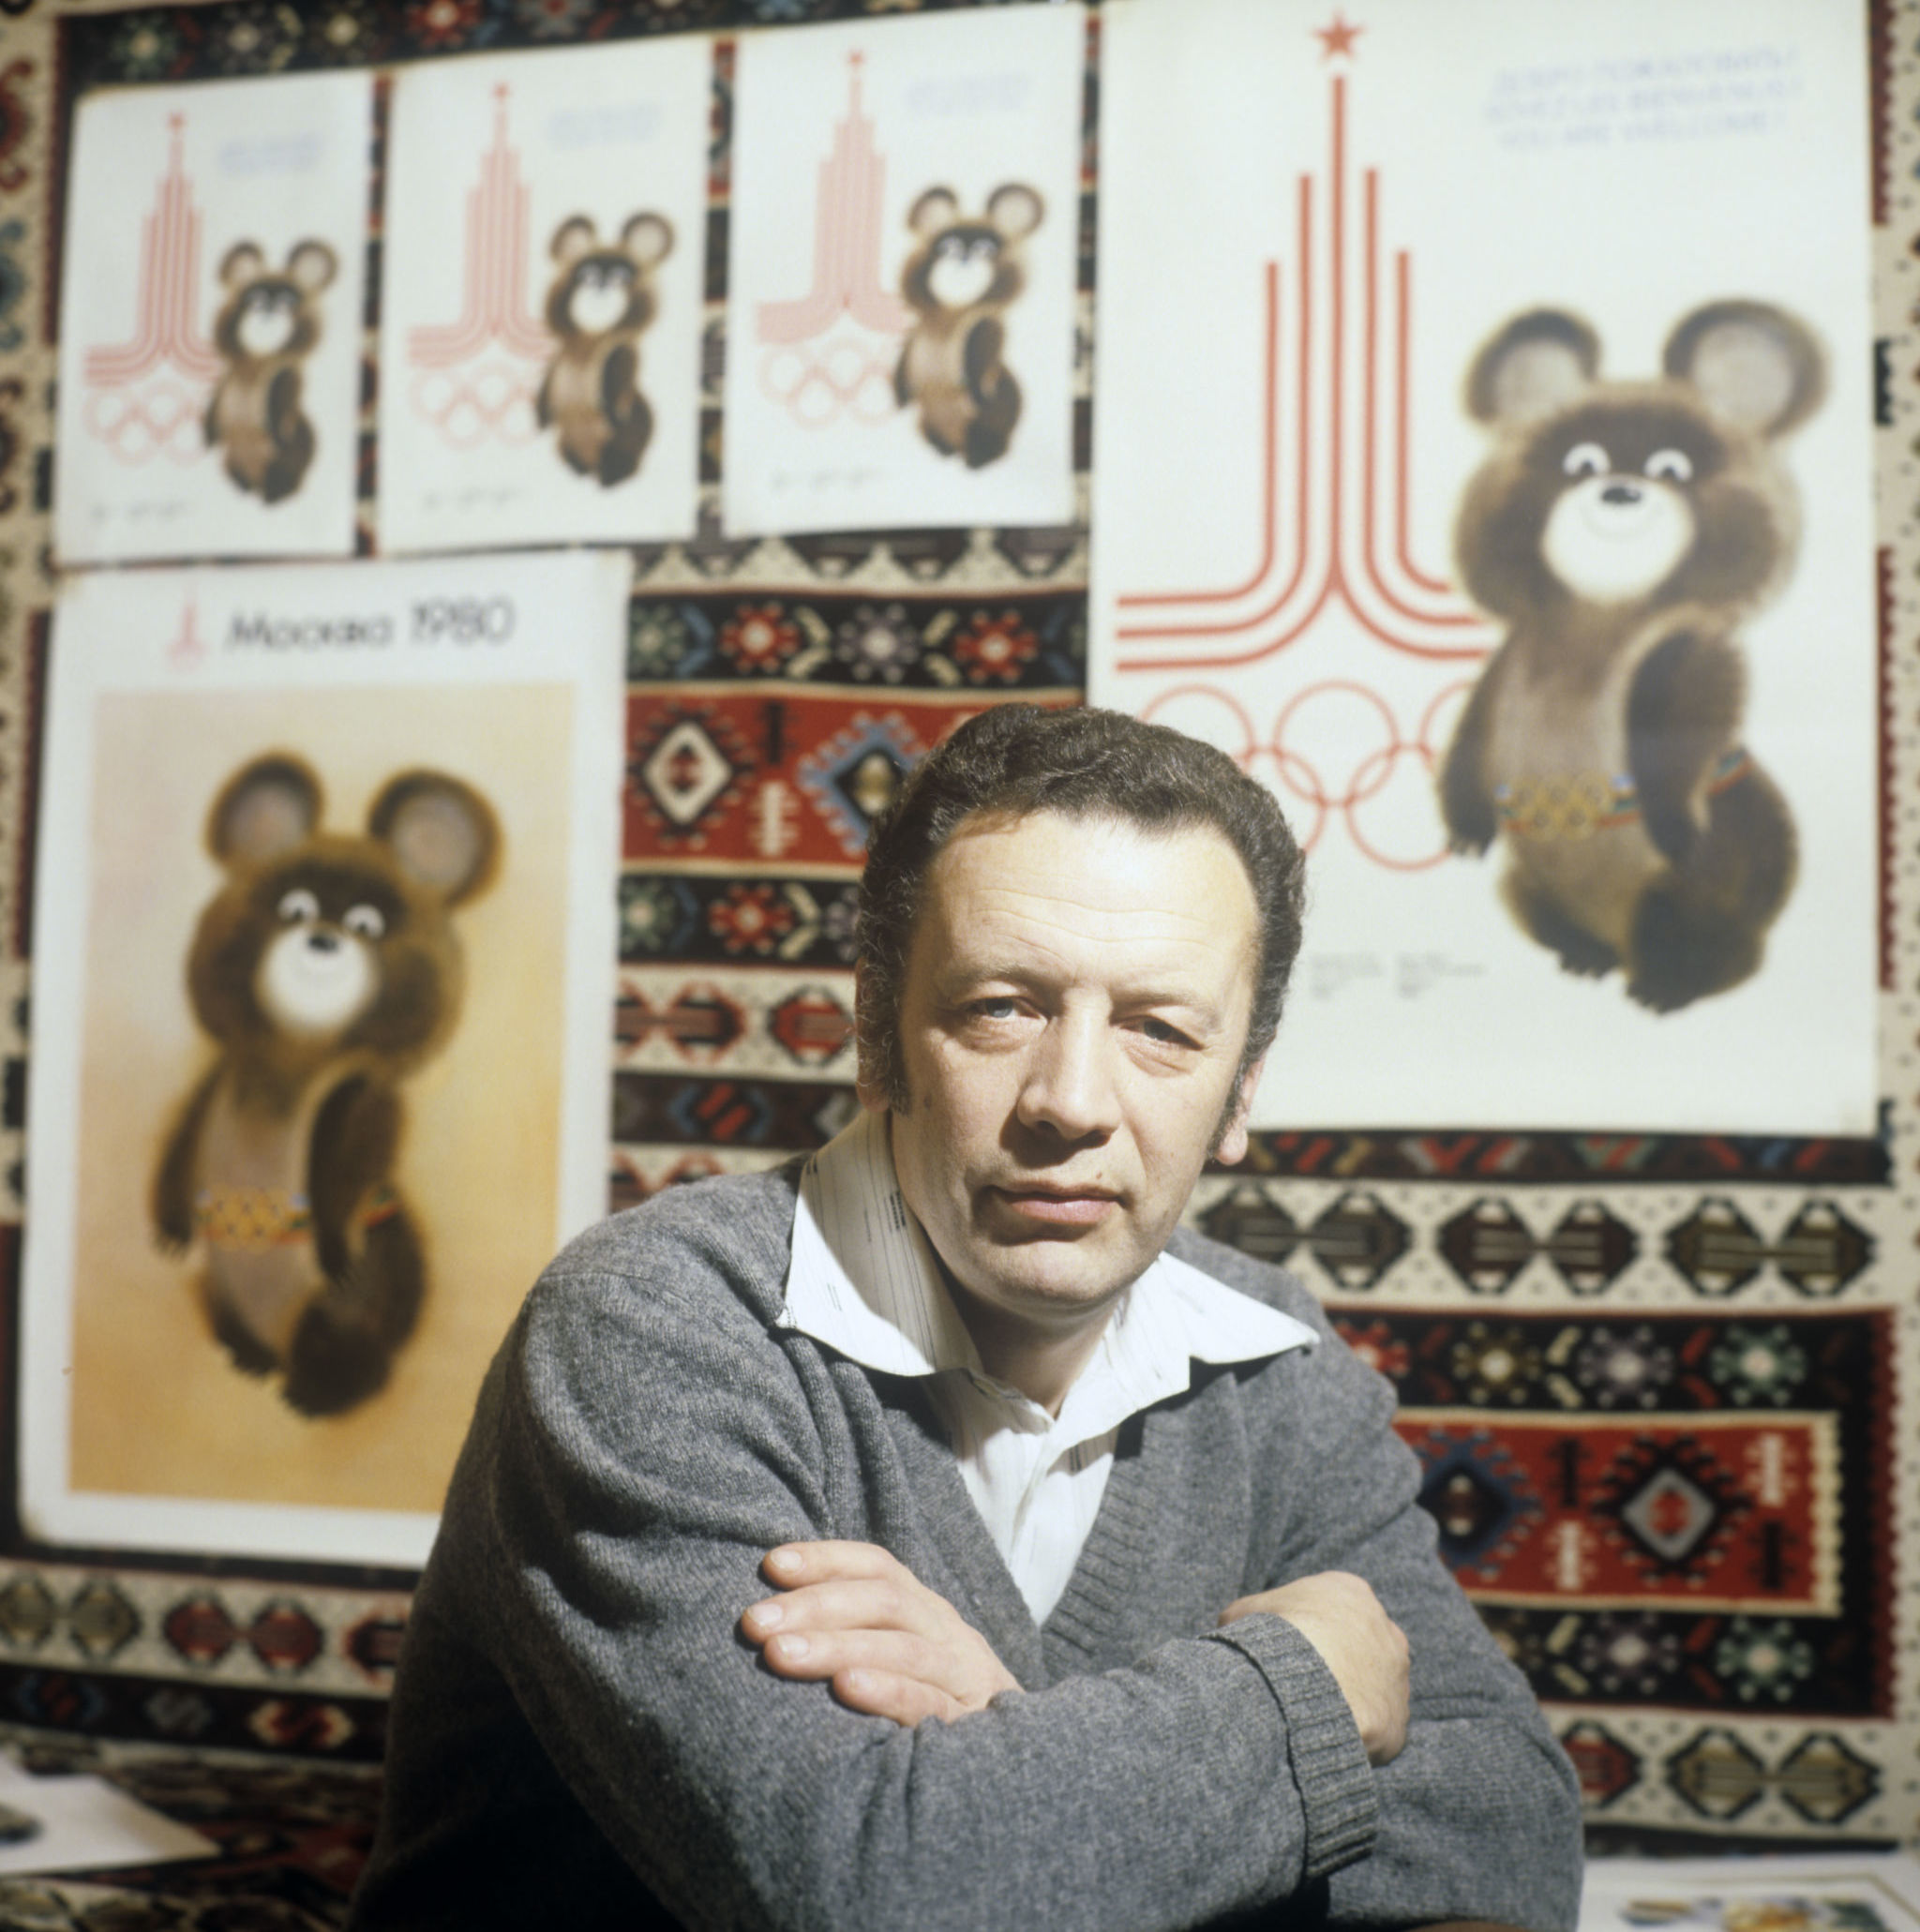 Московский художник Виктор Александрович Чижиков, автор талисмана XXII летних олимпийских игр – медвежонка Мишки